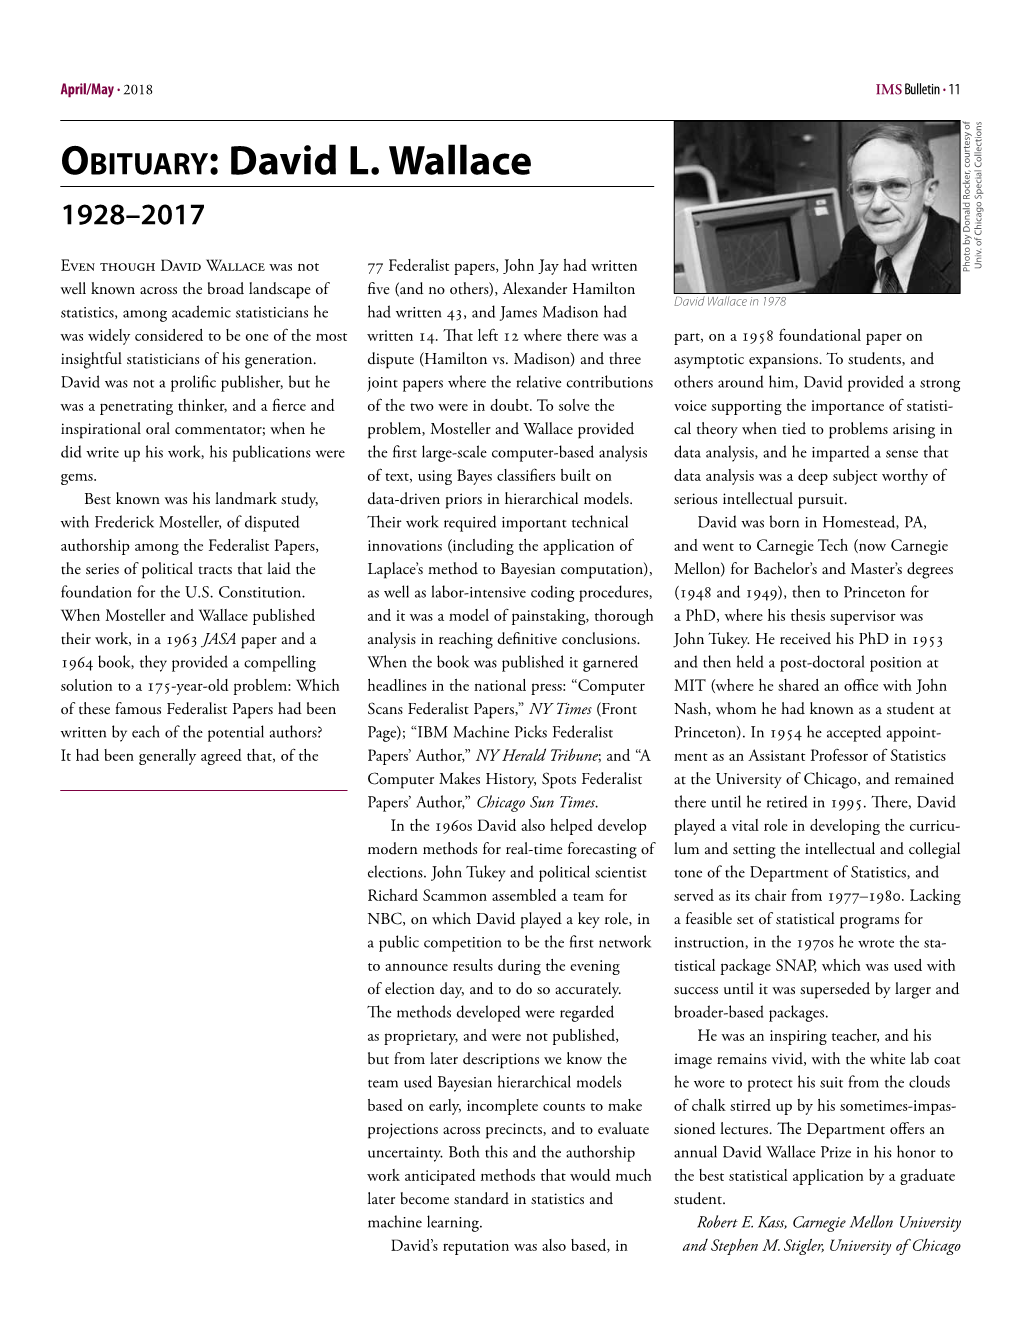 OBITUARY: David L. Wallace 1928–2017 Univ